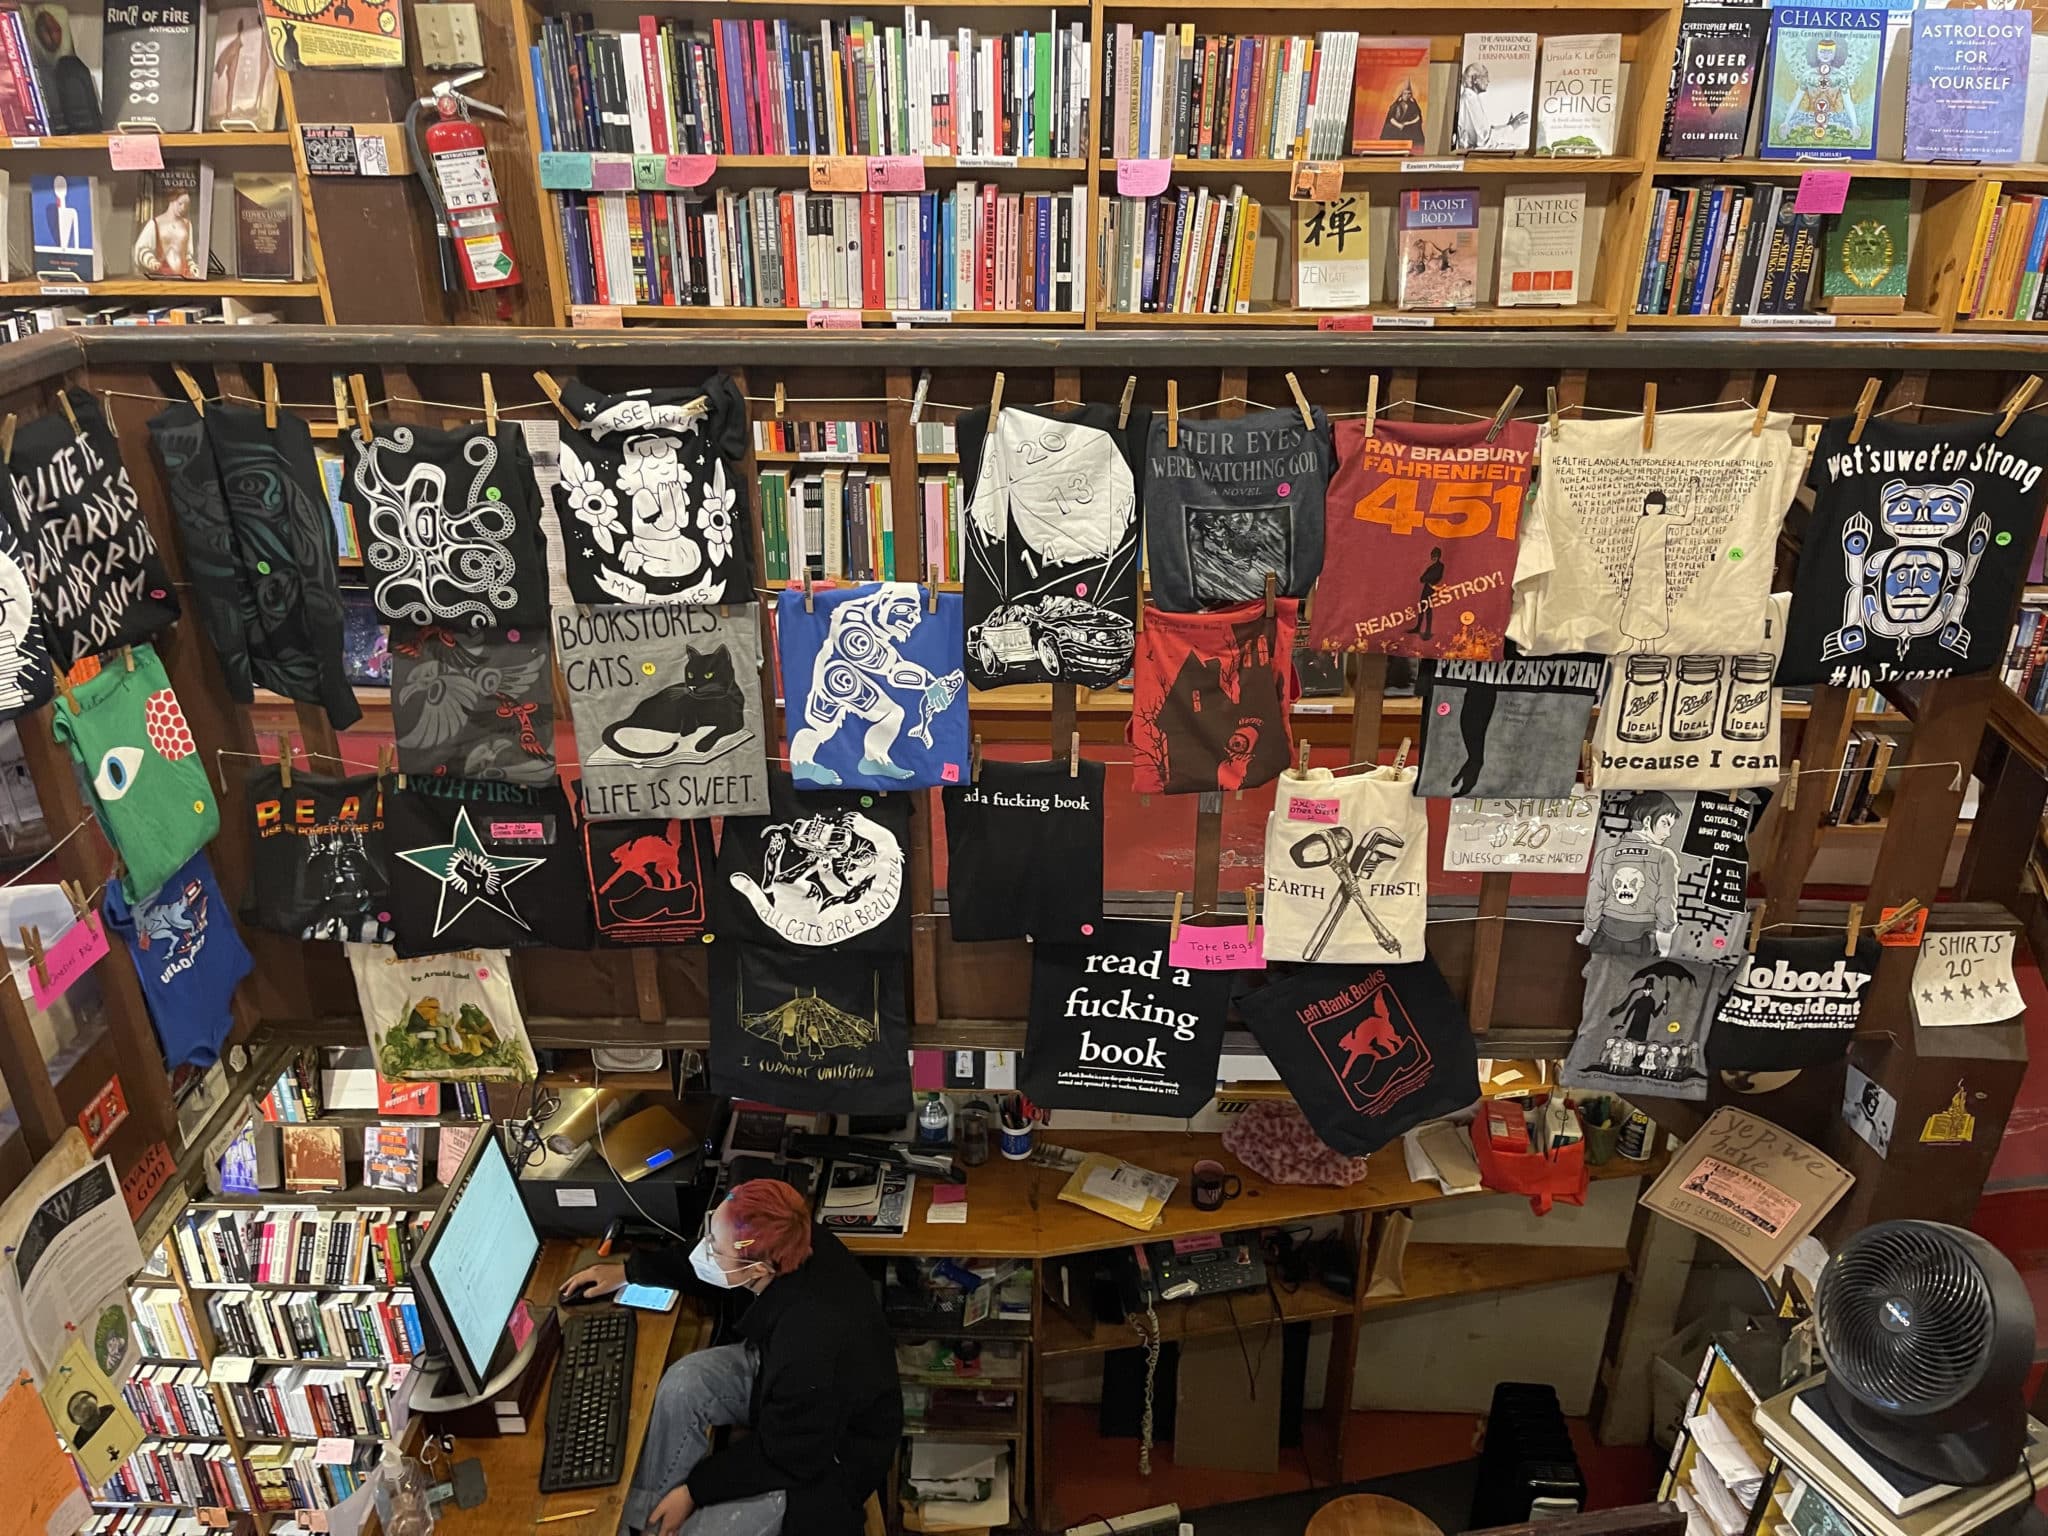 Left Bank Books in Seattle, WA